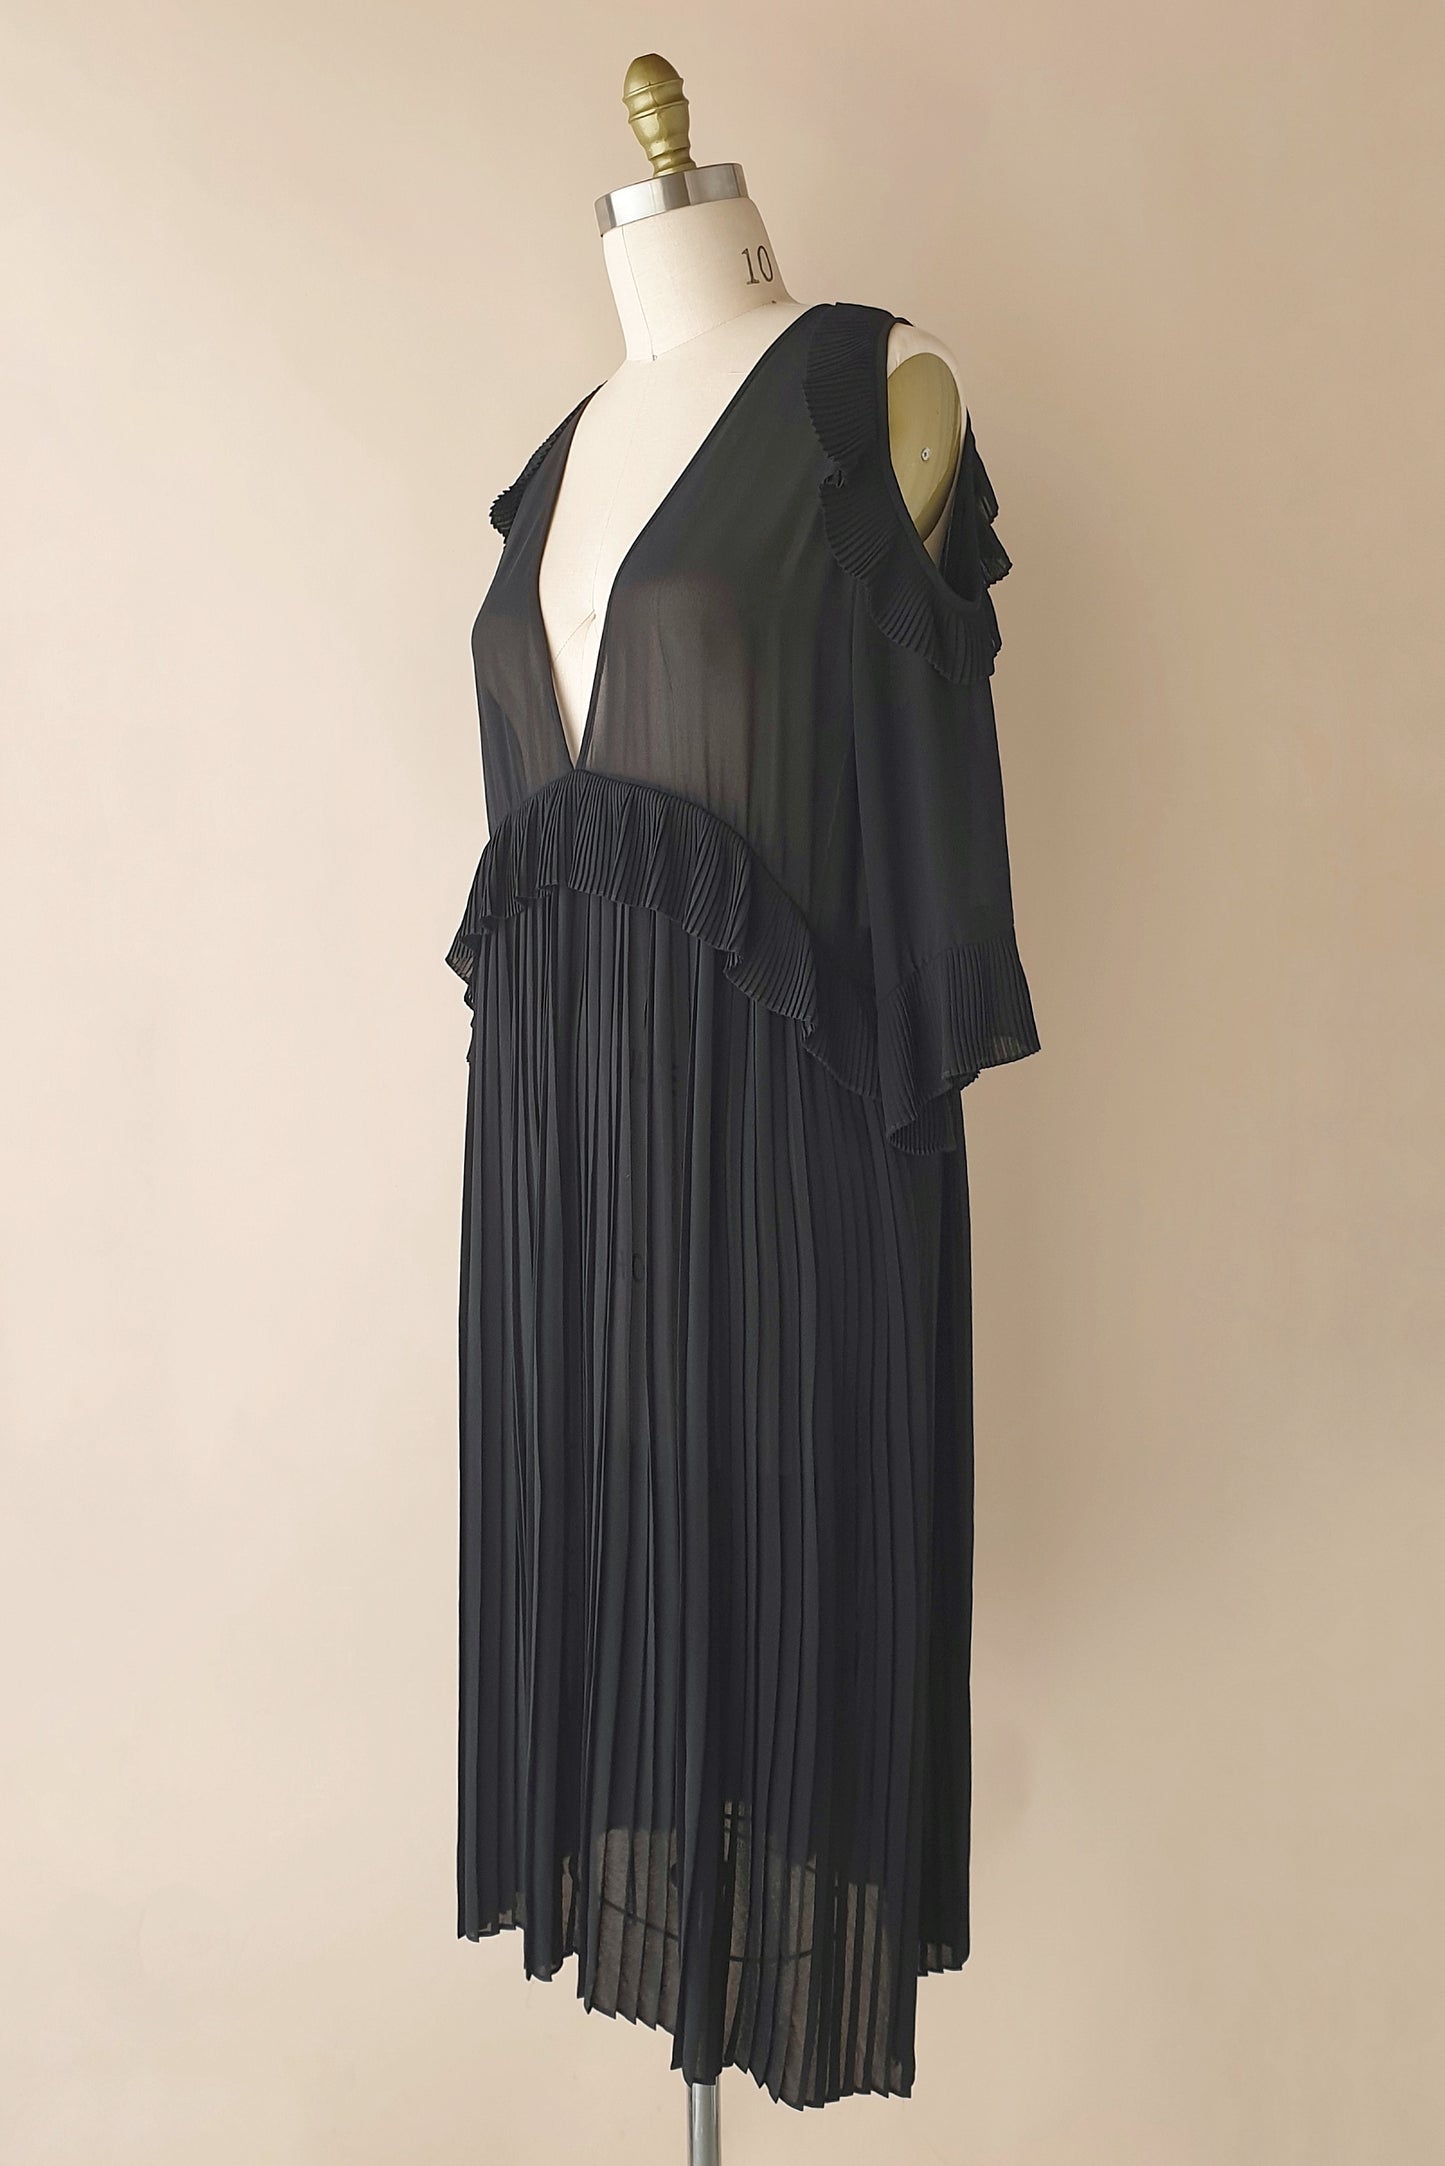 By Malene Birger stunning sheer midi dress Size S/M